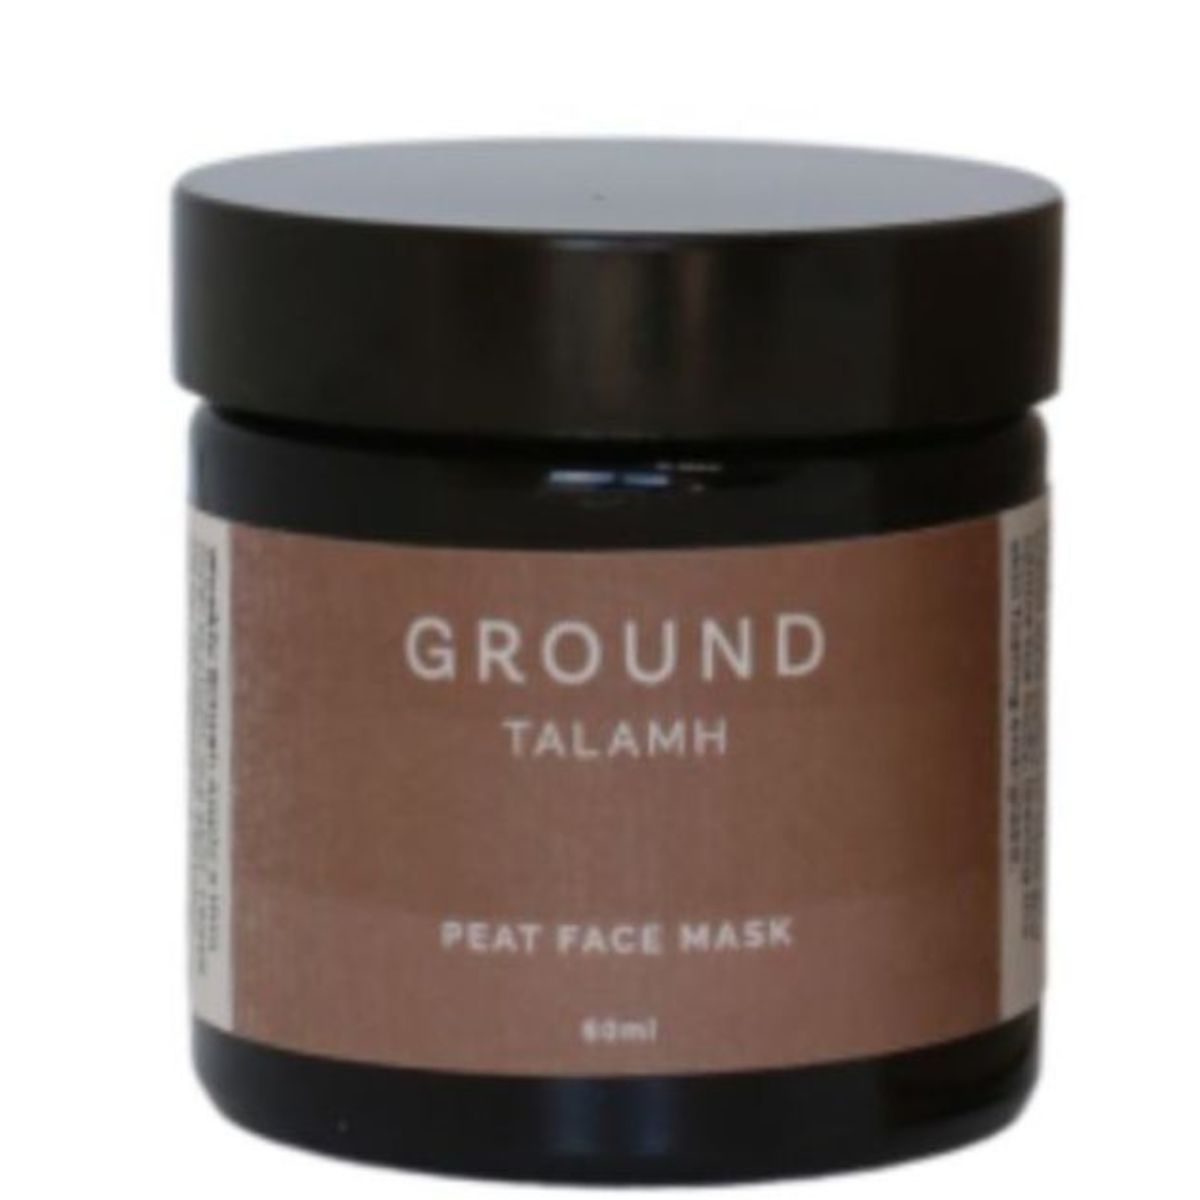 GROUND TALAMH Peat Face Mask